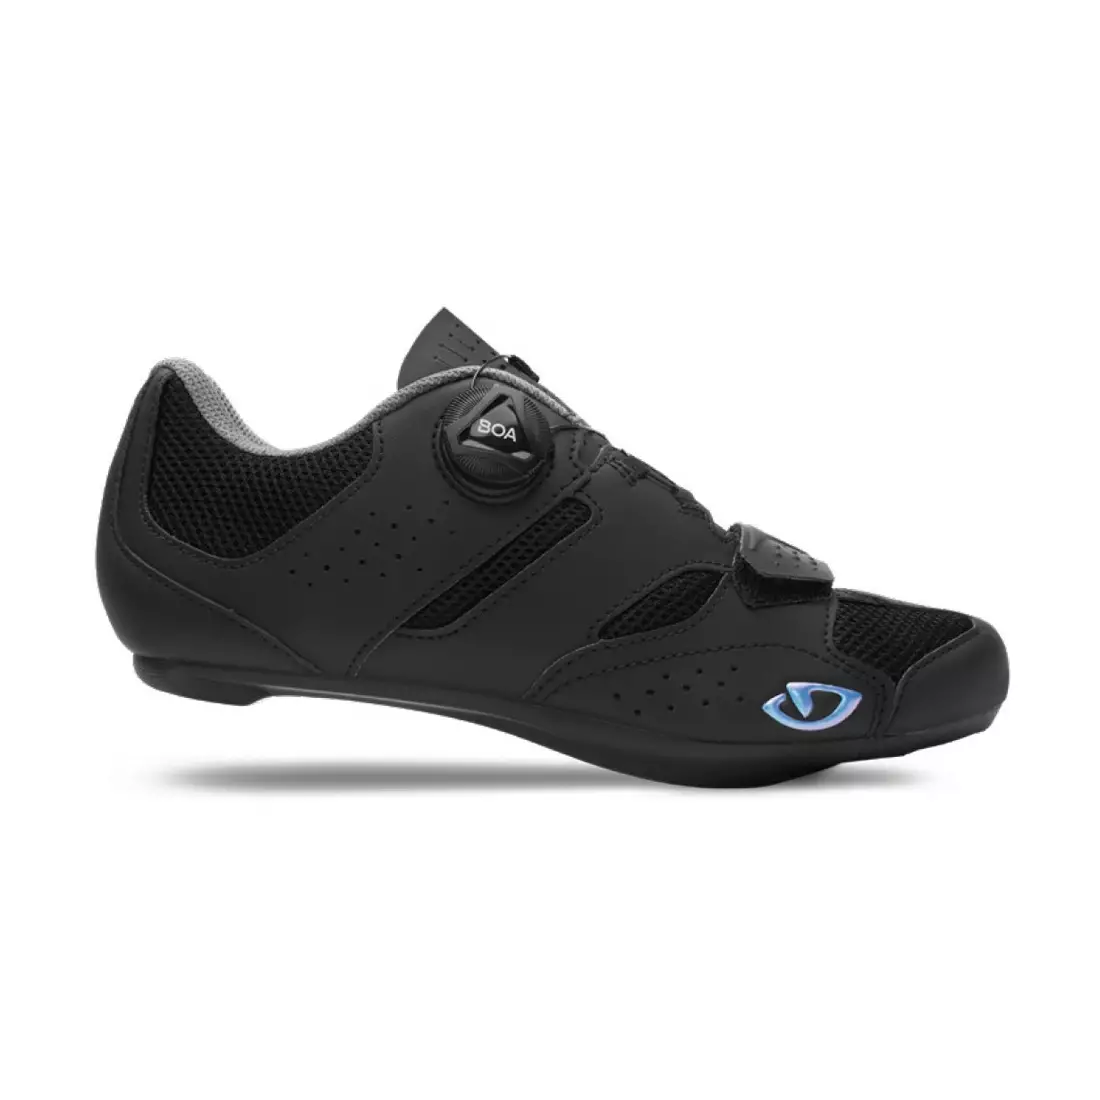 GIRO dámska cyklistická obuv savix II w black GR-7126203